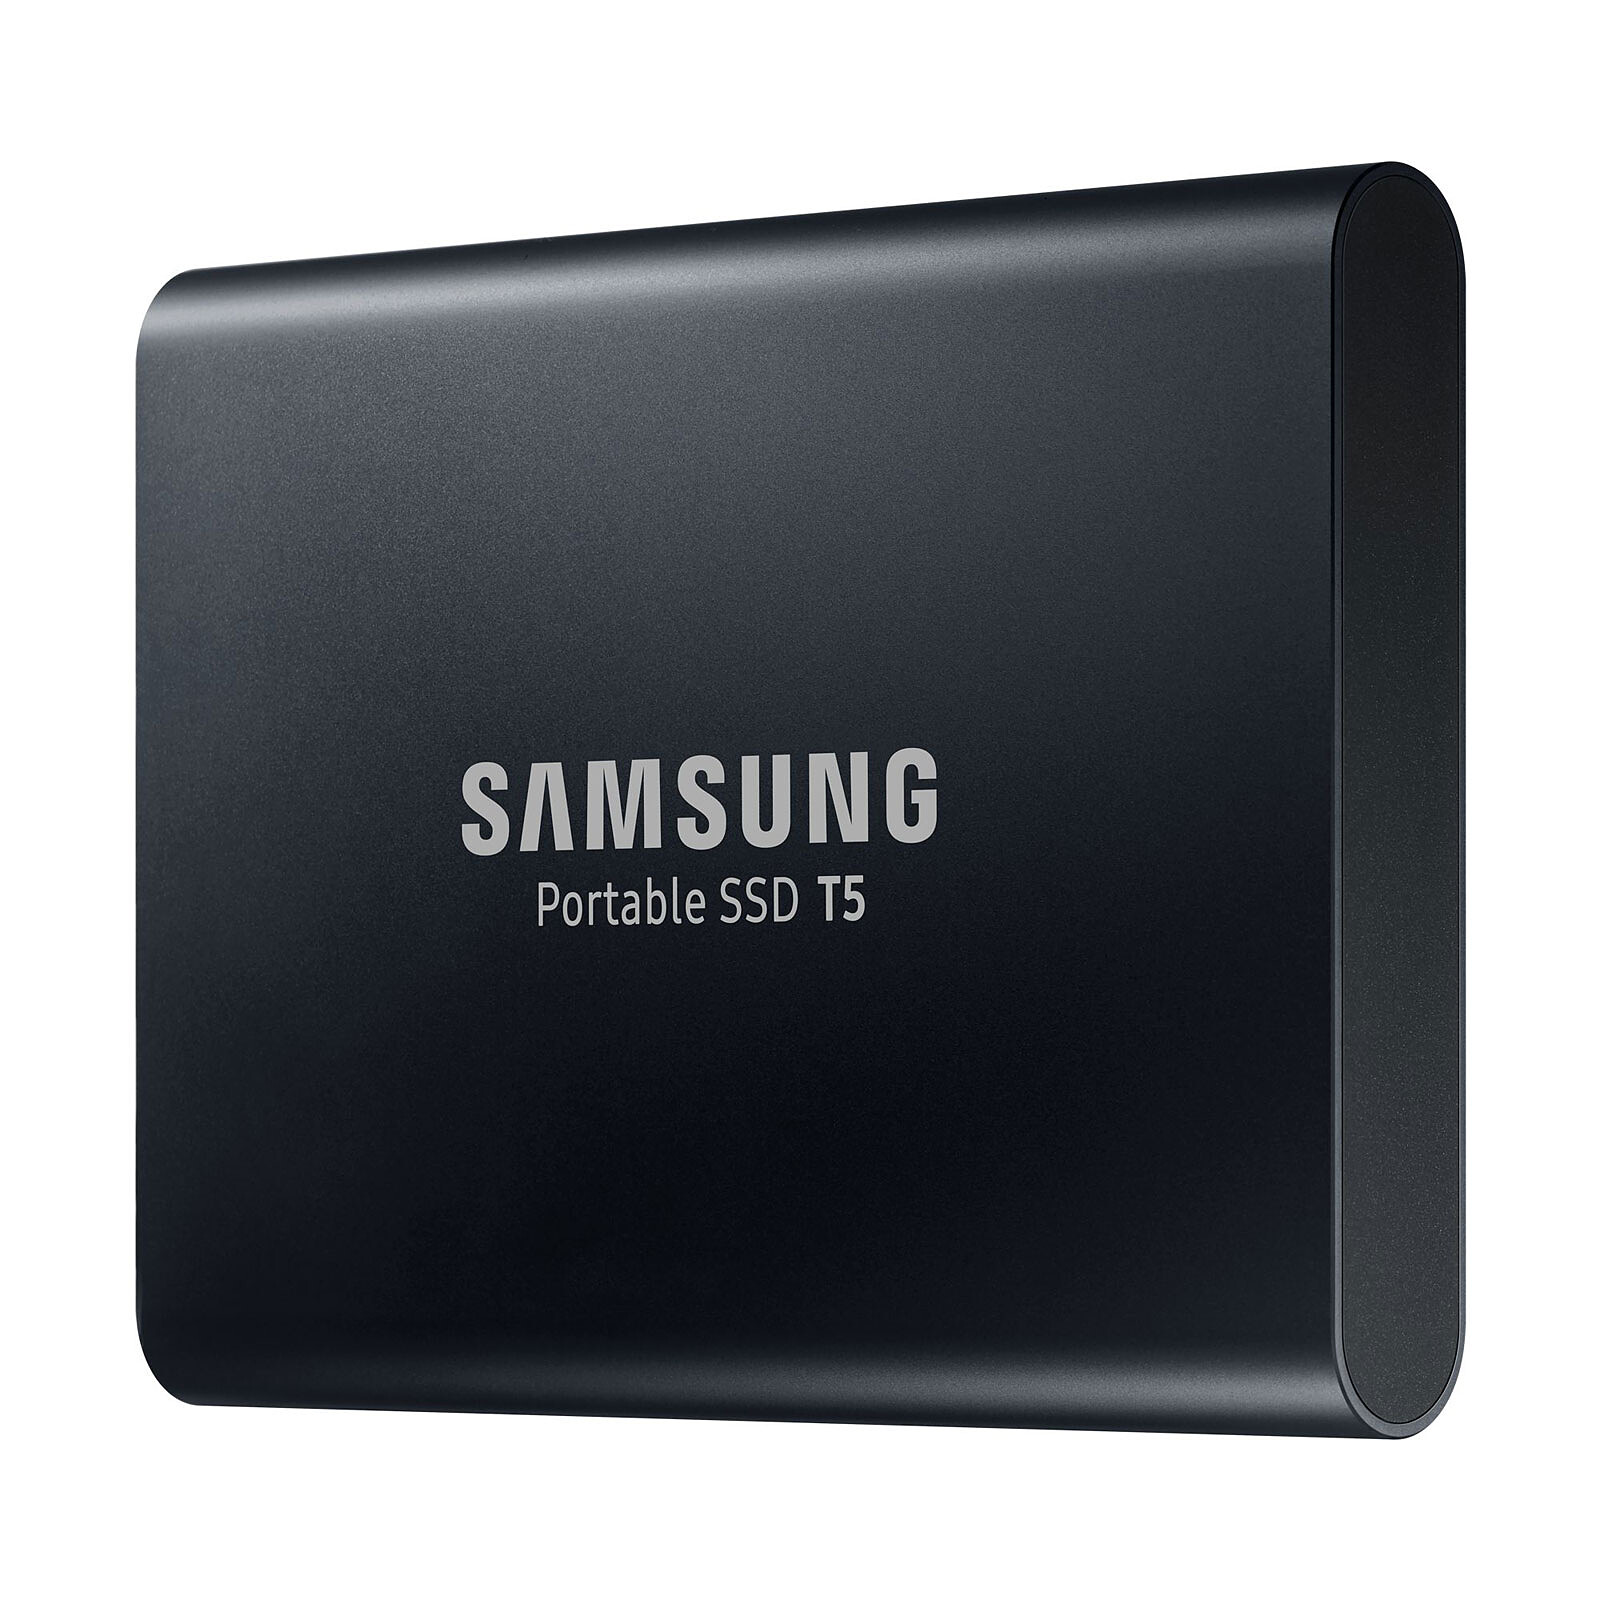 Samsung SSD Portable T5 1Tb - External hard drive - LDLC 3-year warranty